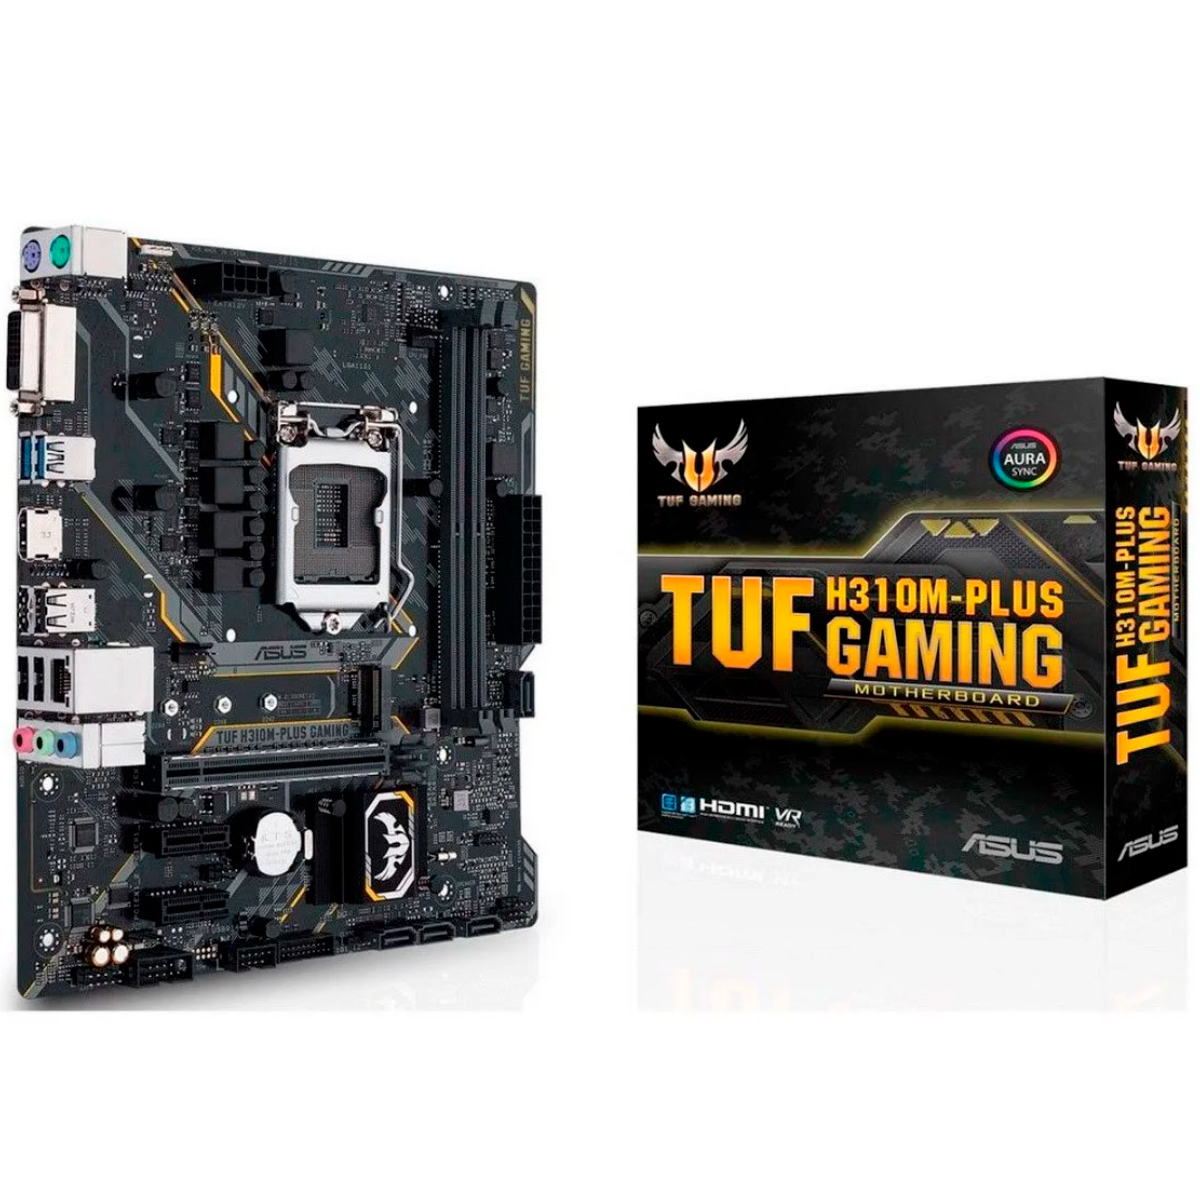 Asus TUF H310M PLUS GAMING/BR (LGA 1151 - DDR4 2666) - Chipset Intel H310 - USB 3.1 - Slot M.2 - Micro ATX